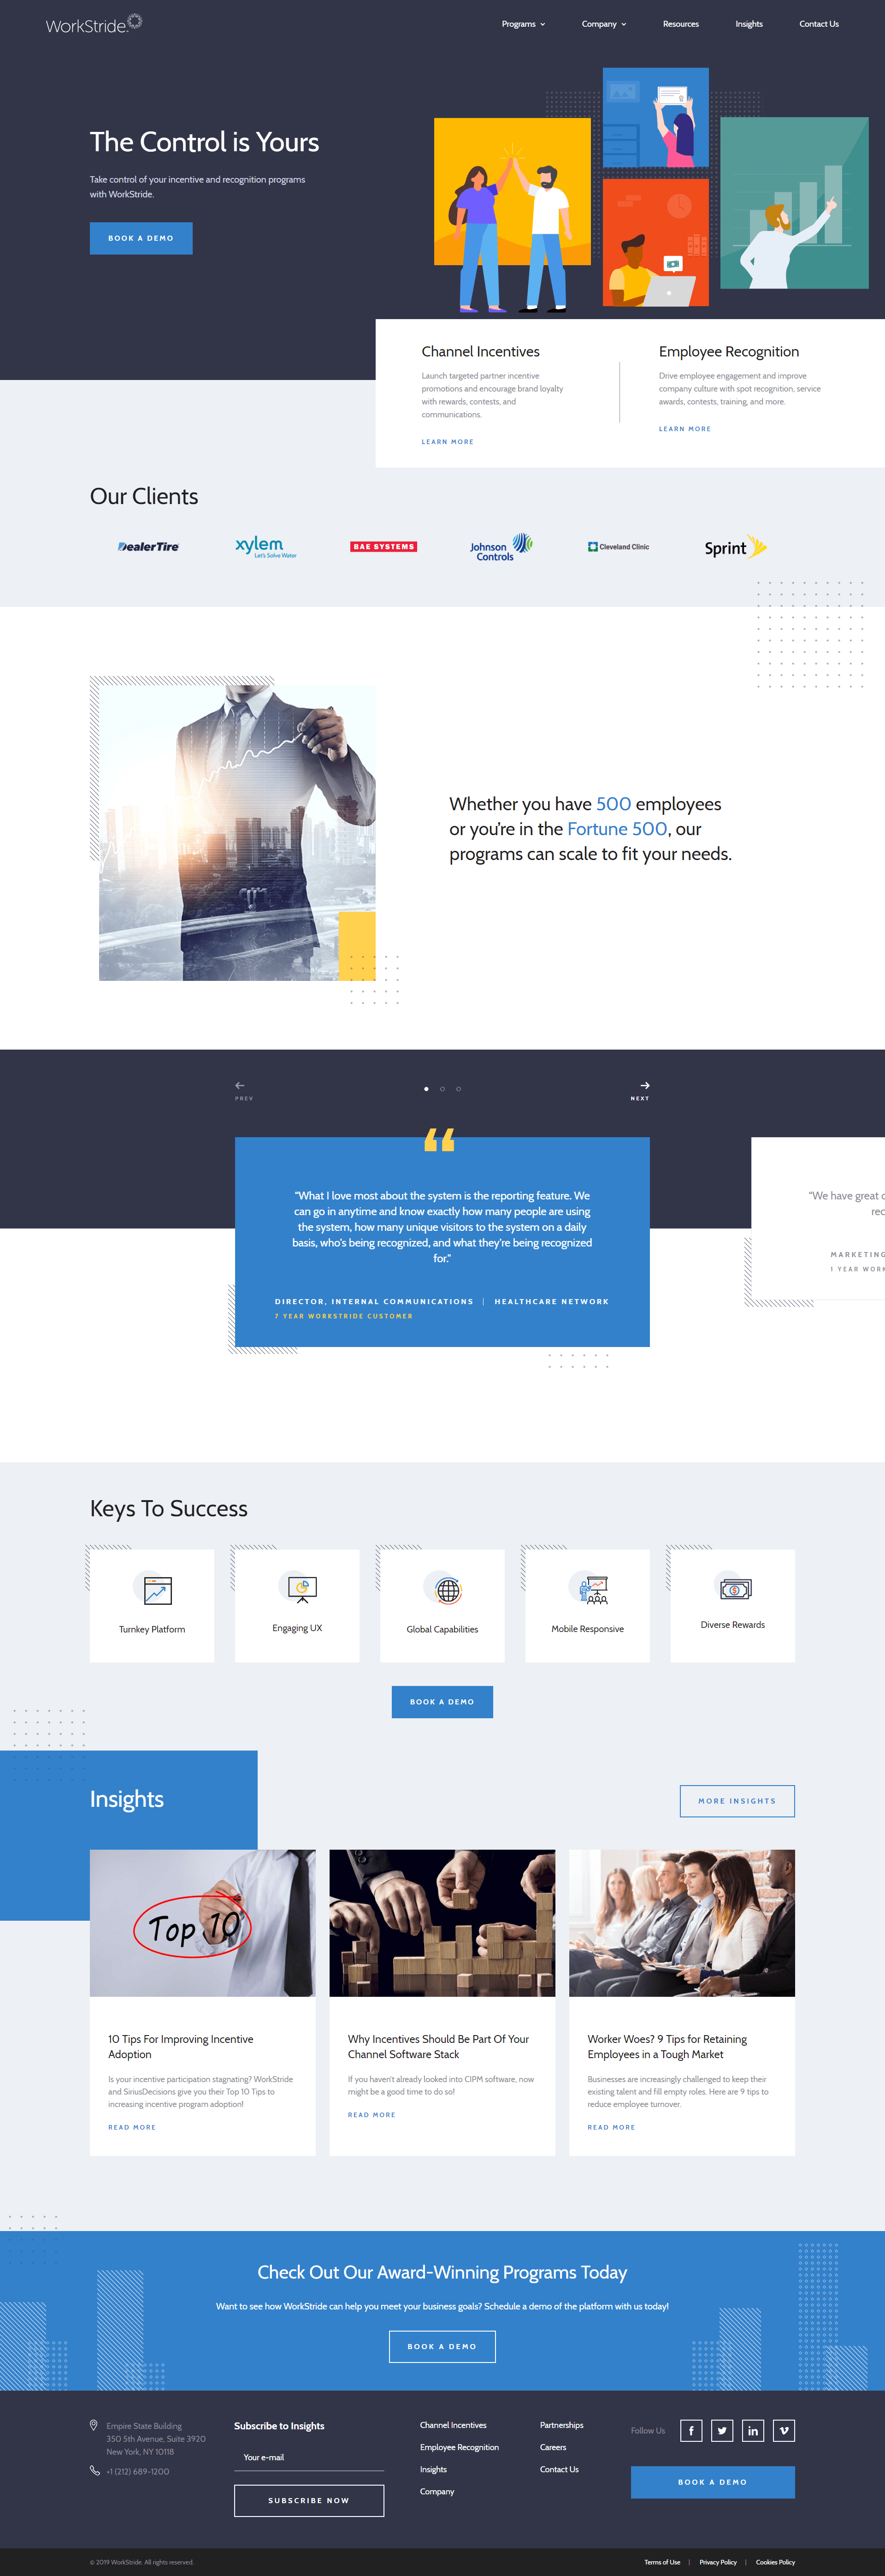 WorkStride's Home Page Design & Development